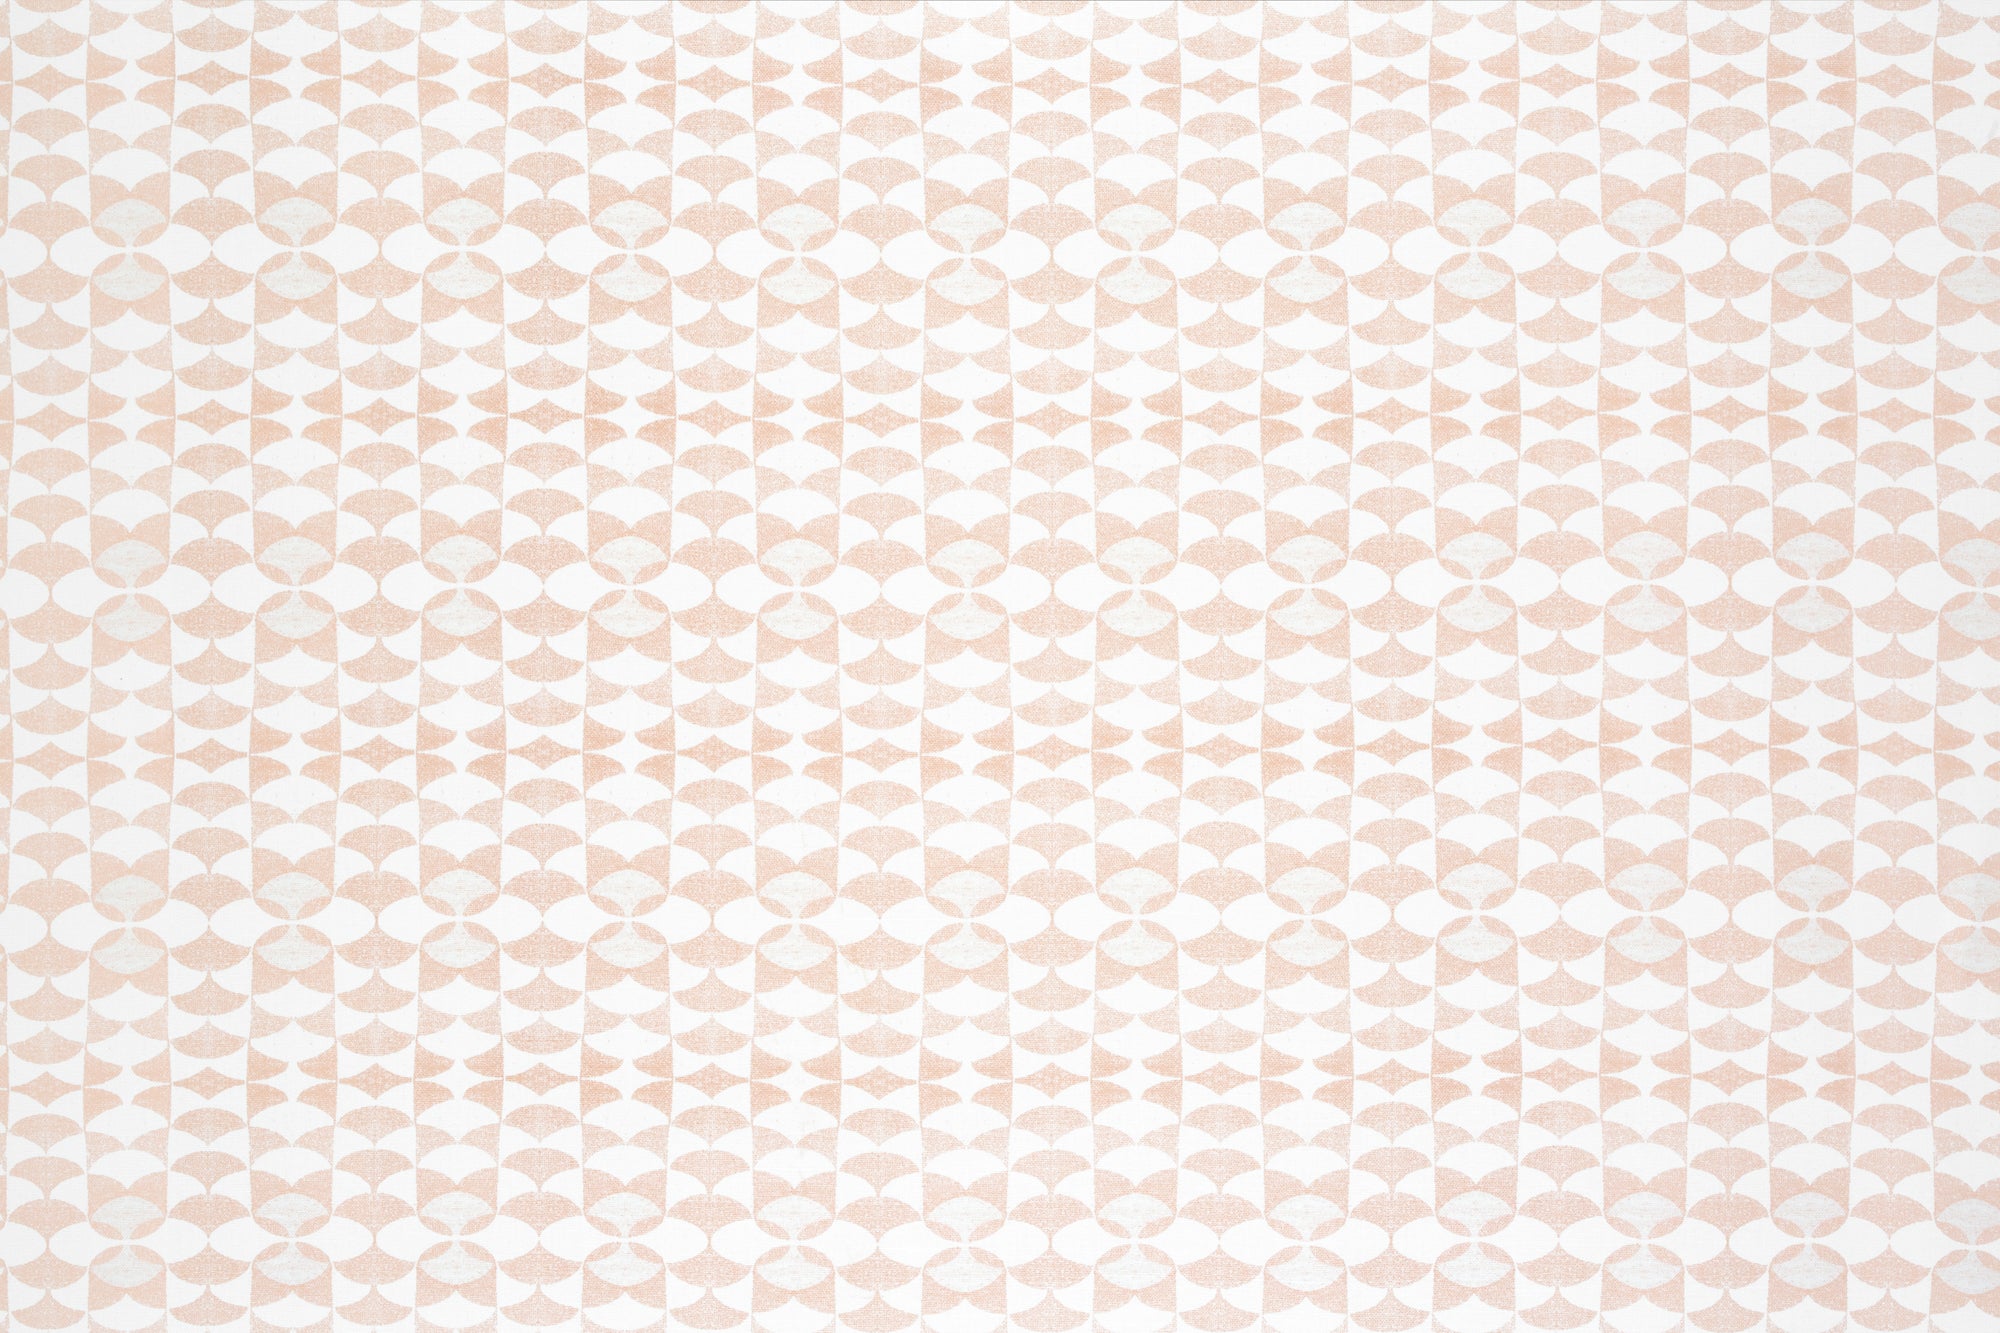 Detail of fabric in a geometric stripe pattern in light pink on a white field.